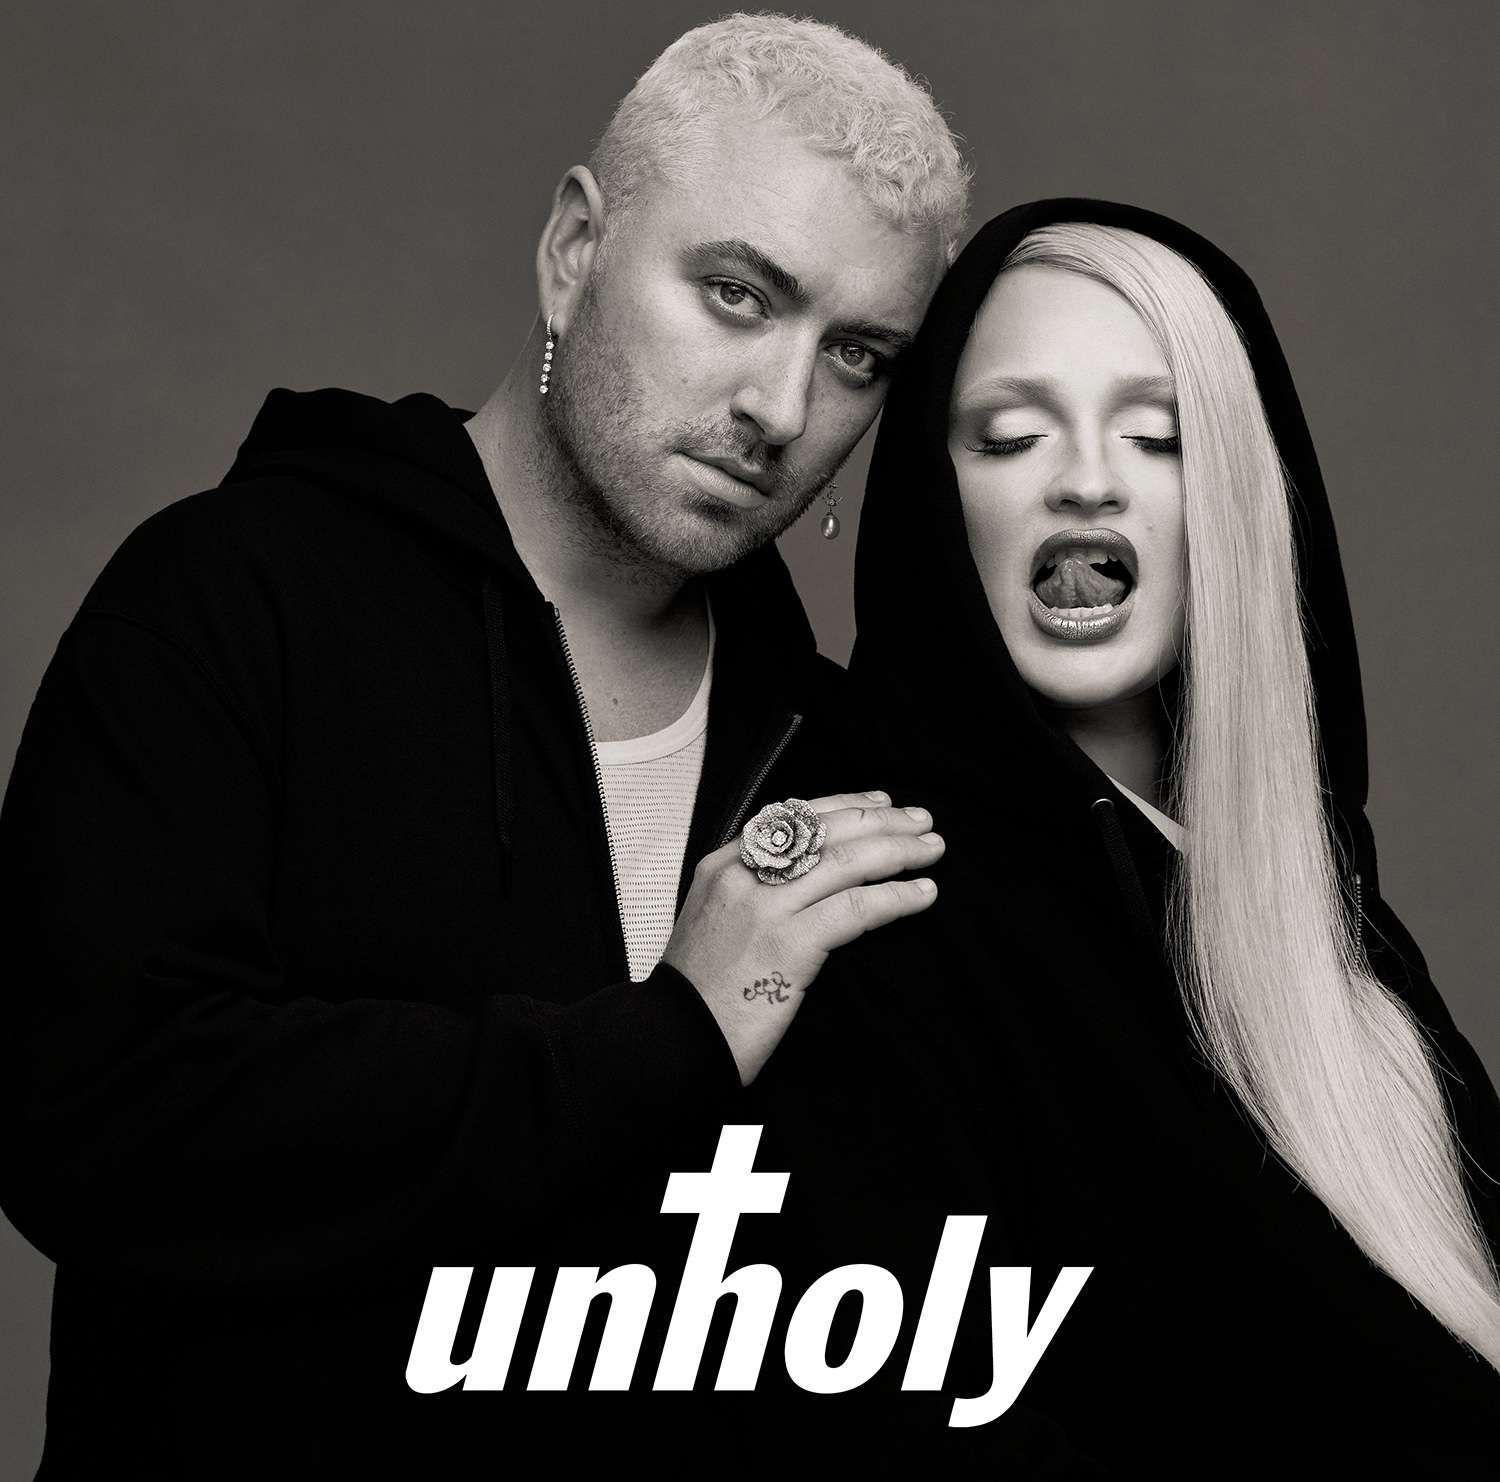 "Unholy" Single Cover Sam Smith and Kim Petras